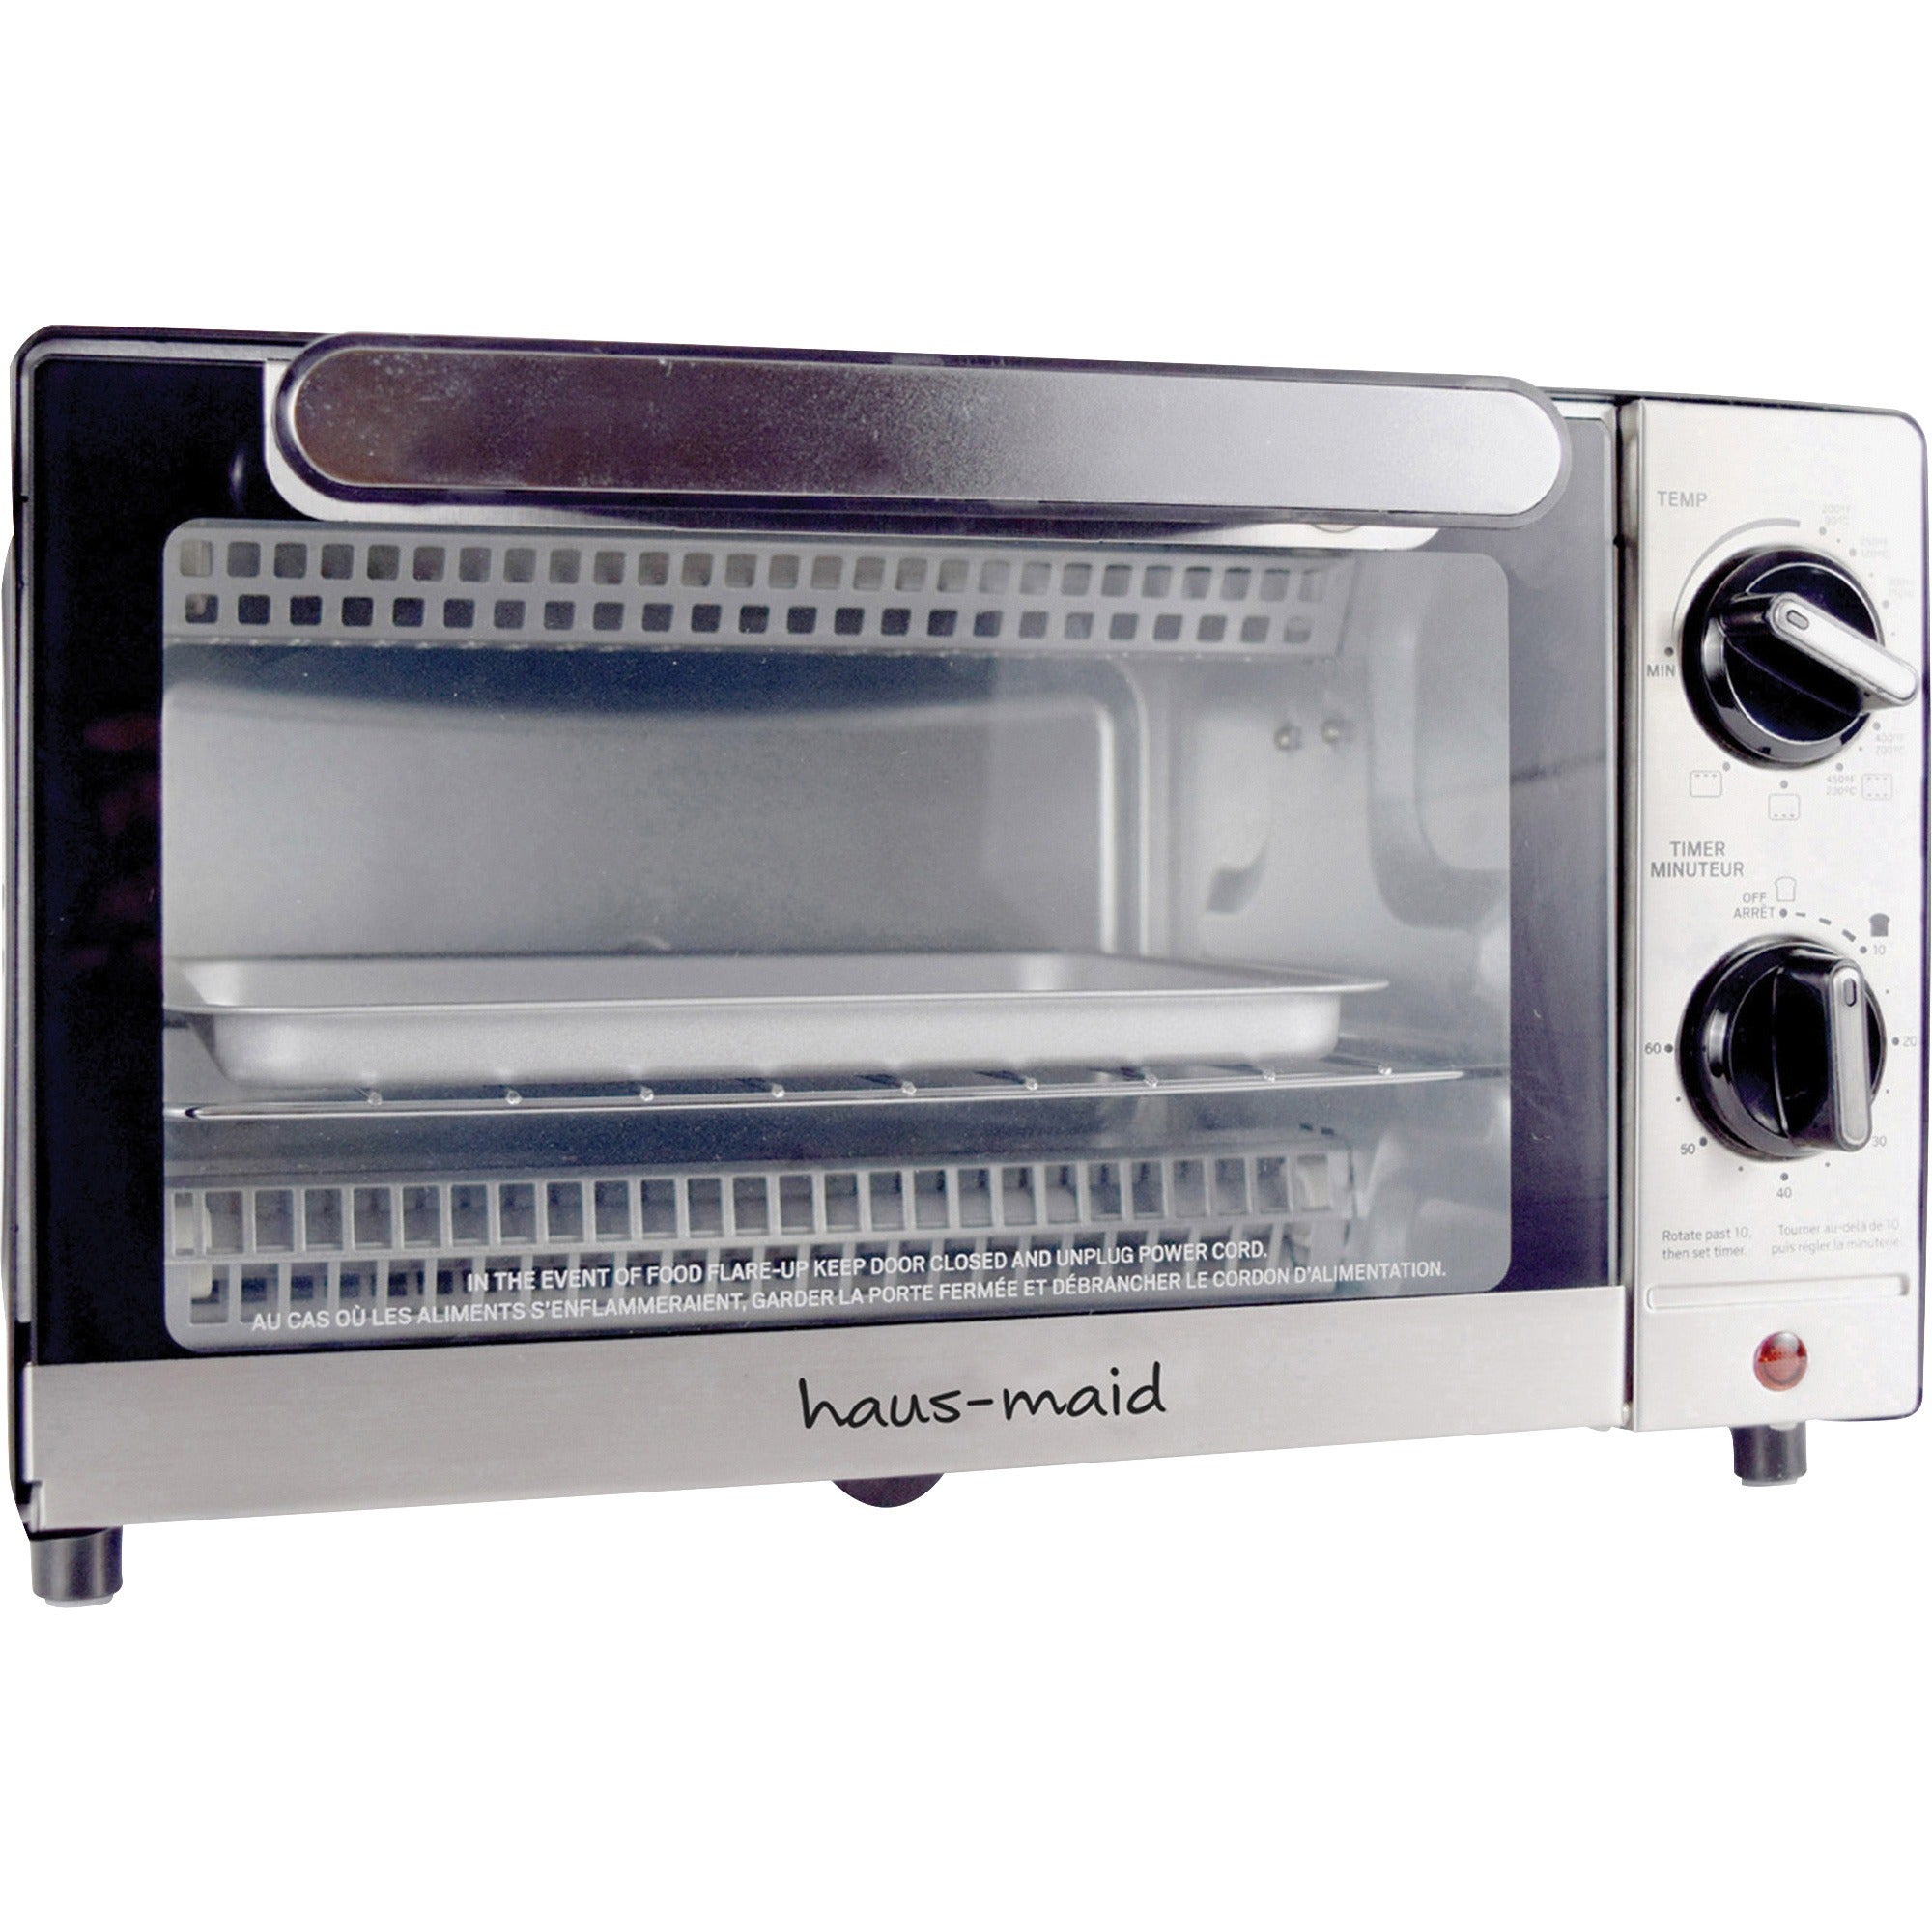 rdi-toaster-oven-toast-bake-broil-bake-gray_cfpog9431 - 1